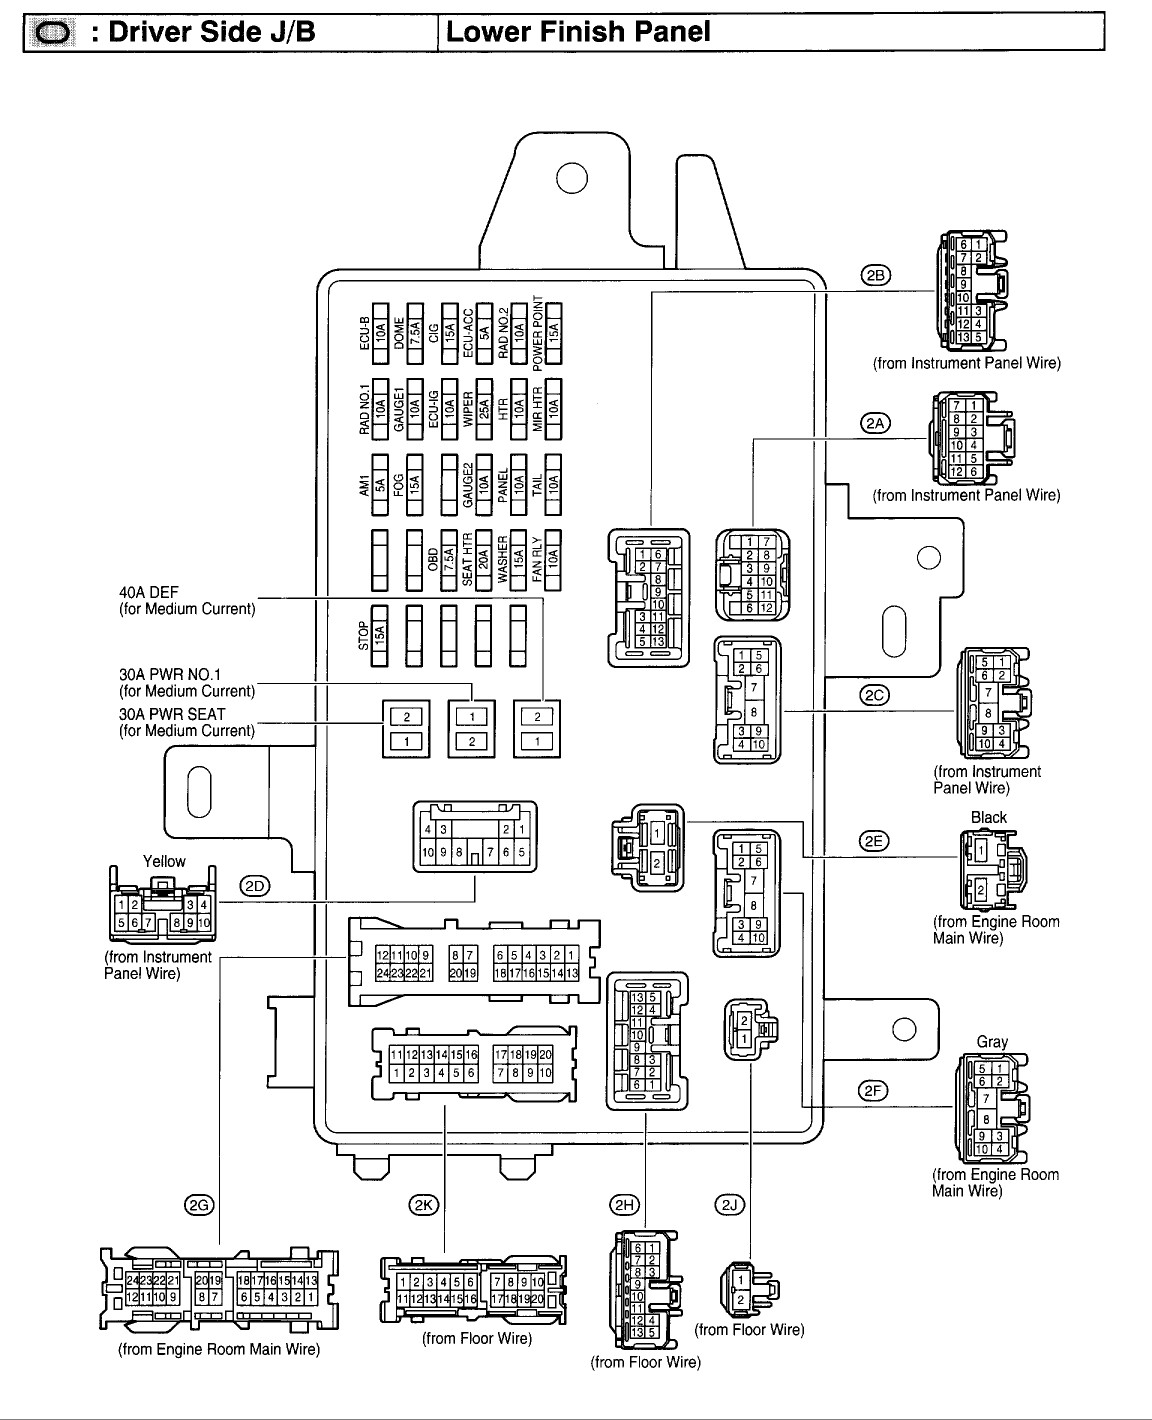 1994 Toyotum Corolla Fuse Box Diagram - Wiring Diagram Schema